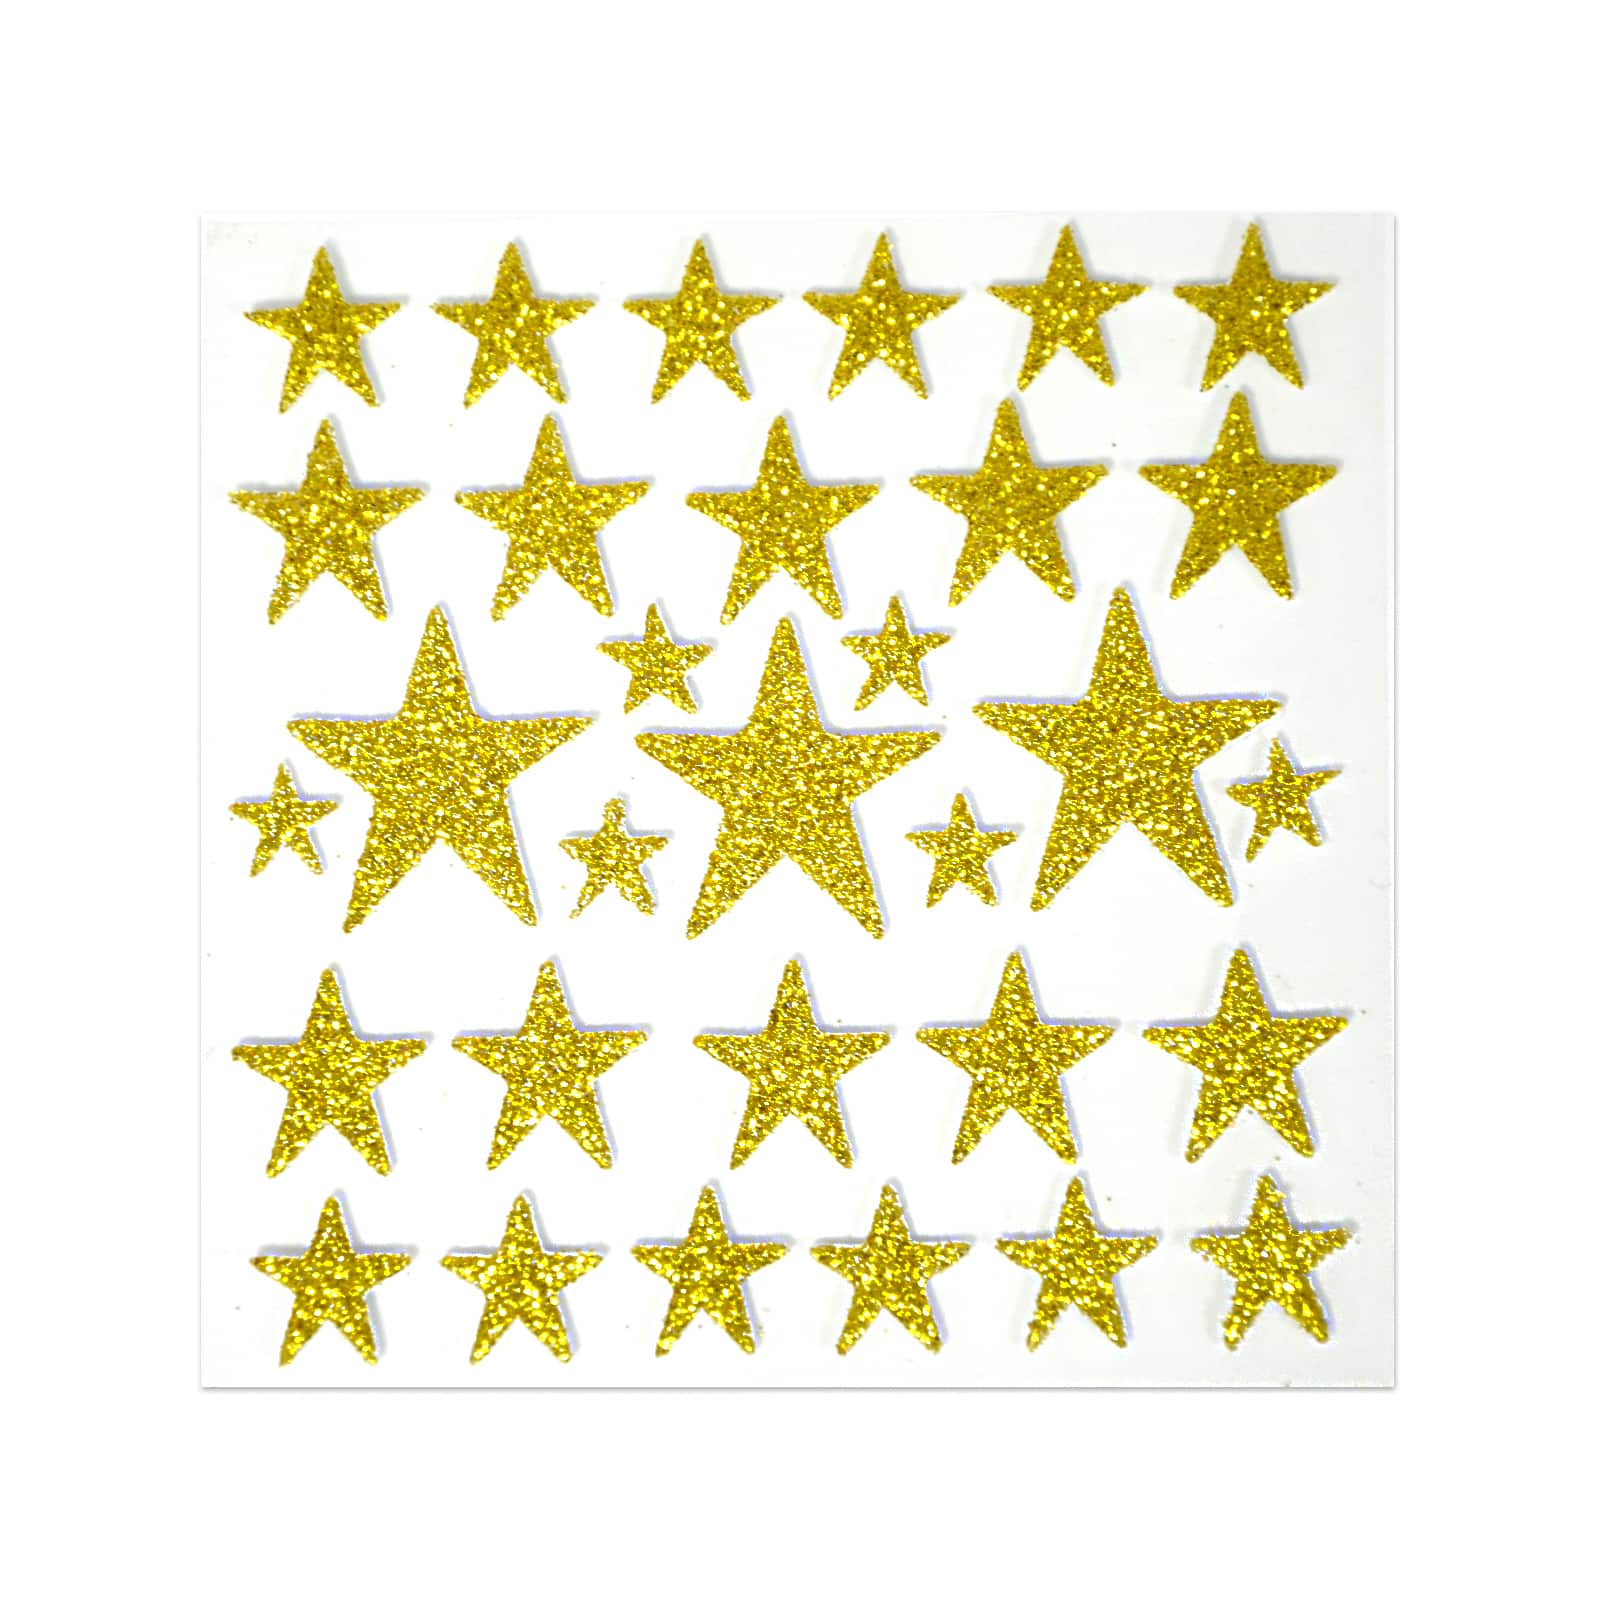 Glitter Foam Stickers - Stars - Silver and Gold - CE-10083, Learning  Advantage